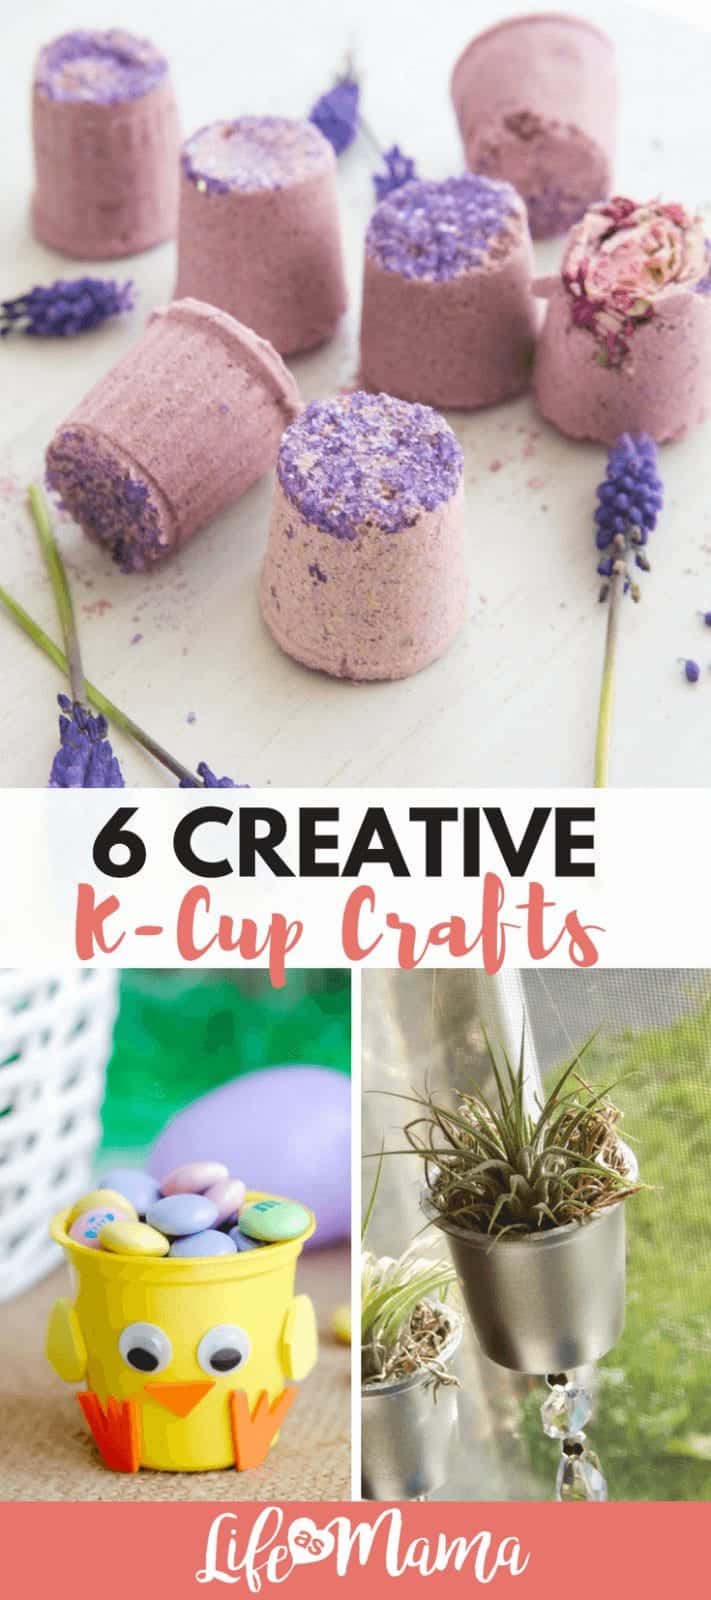 k-cup crafts